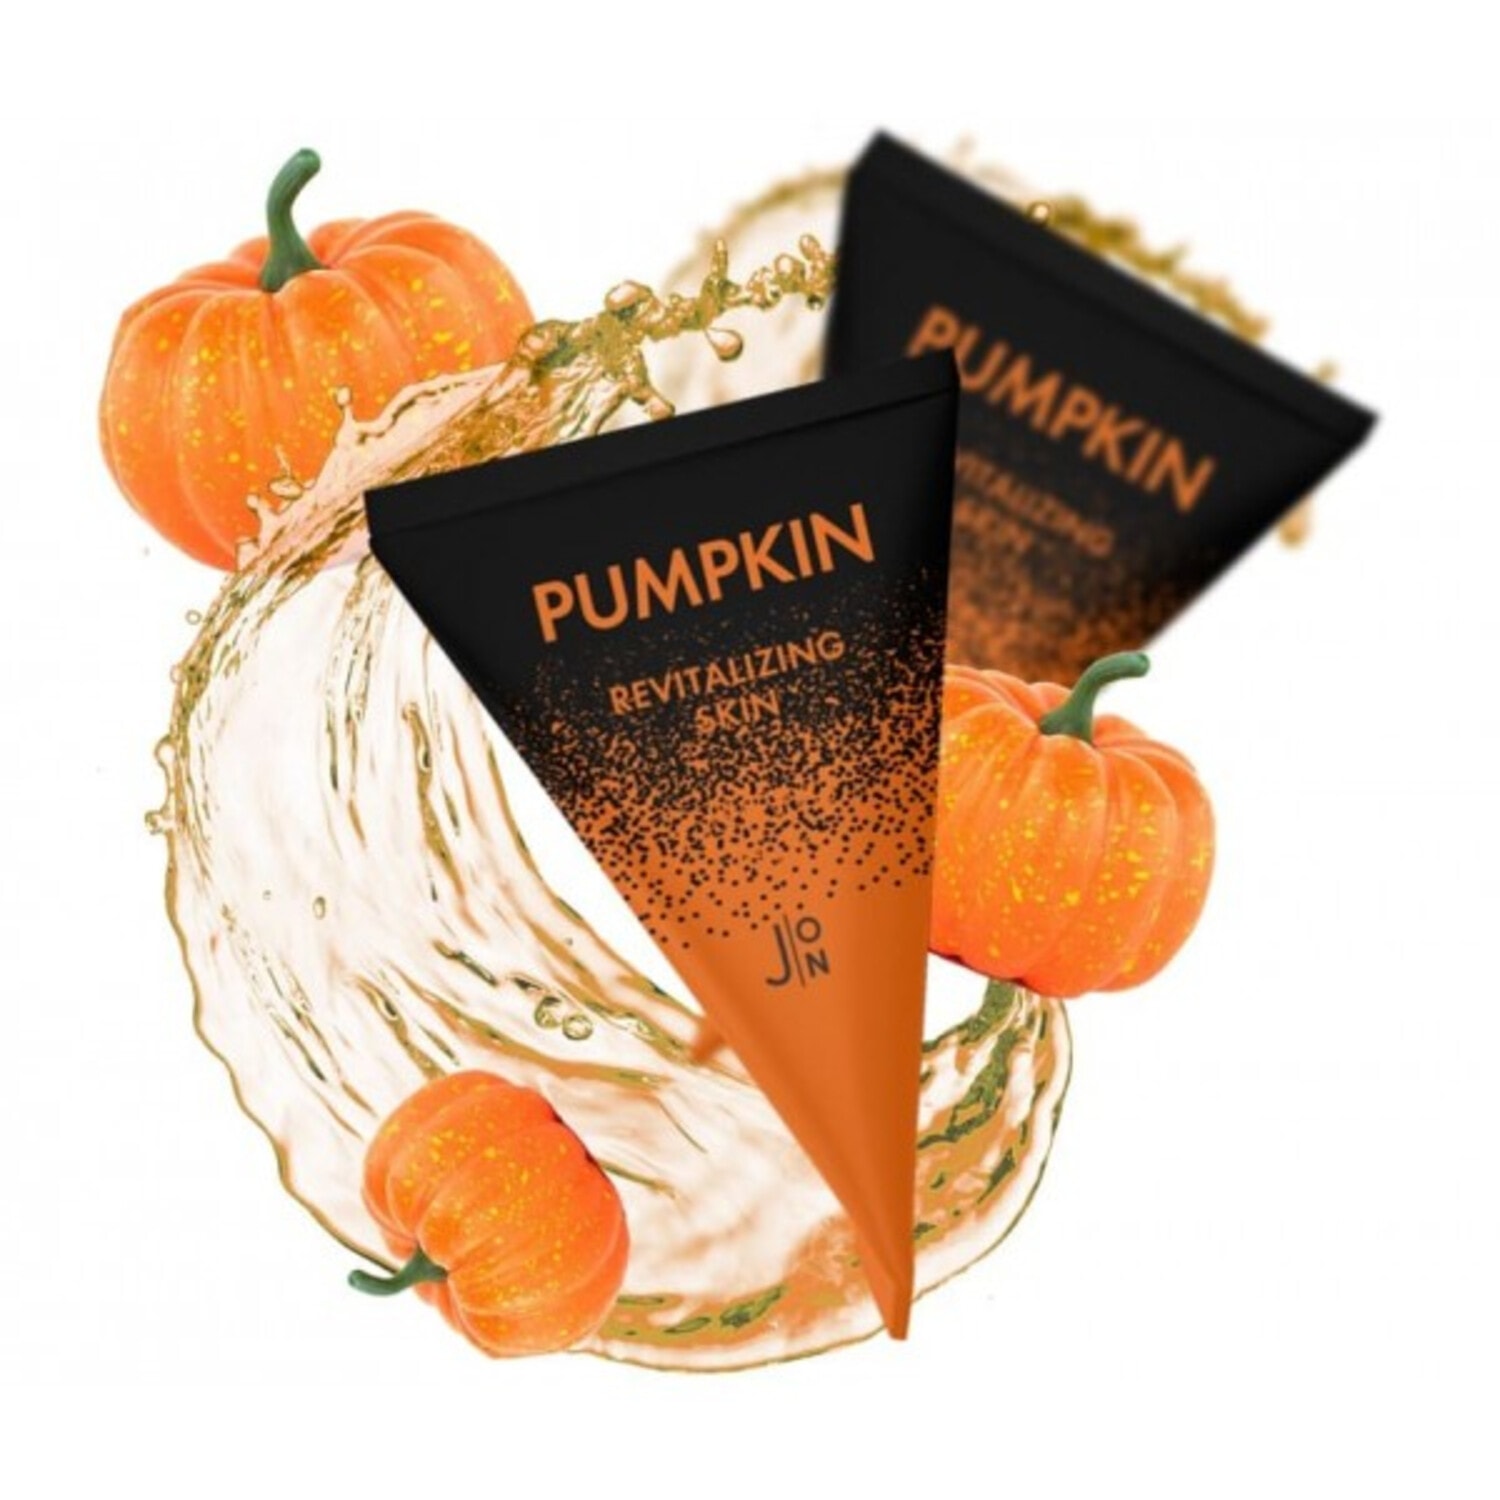  Pumpkin Revitalizing Skin Sleeping Pack Маска для ревитализации кожи лица ночная с тыквой, 5г. / 007076